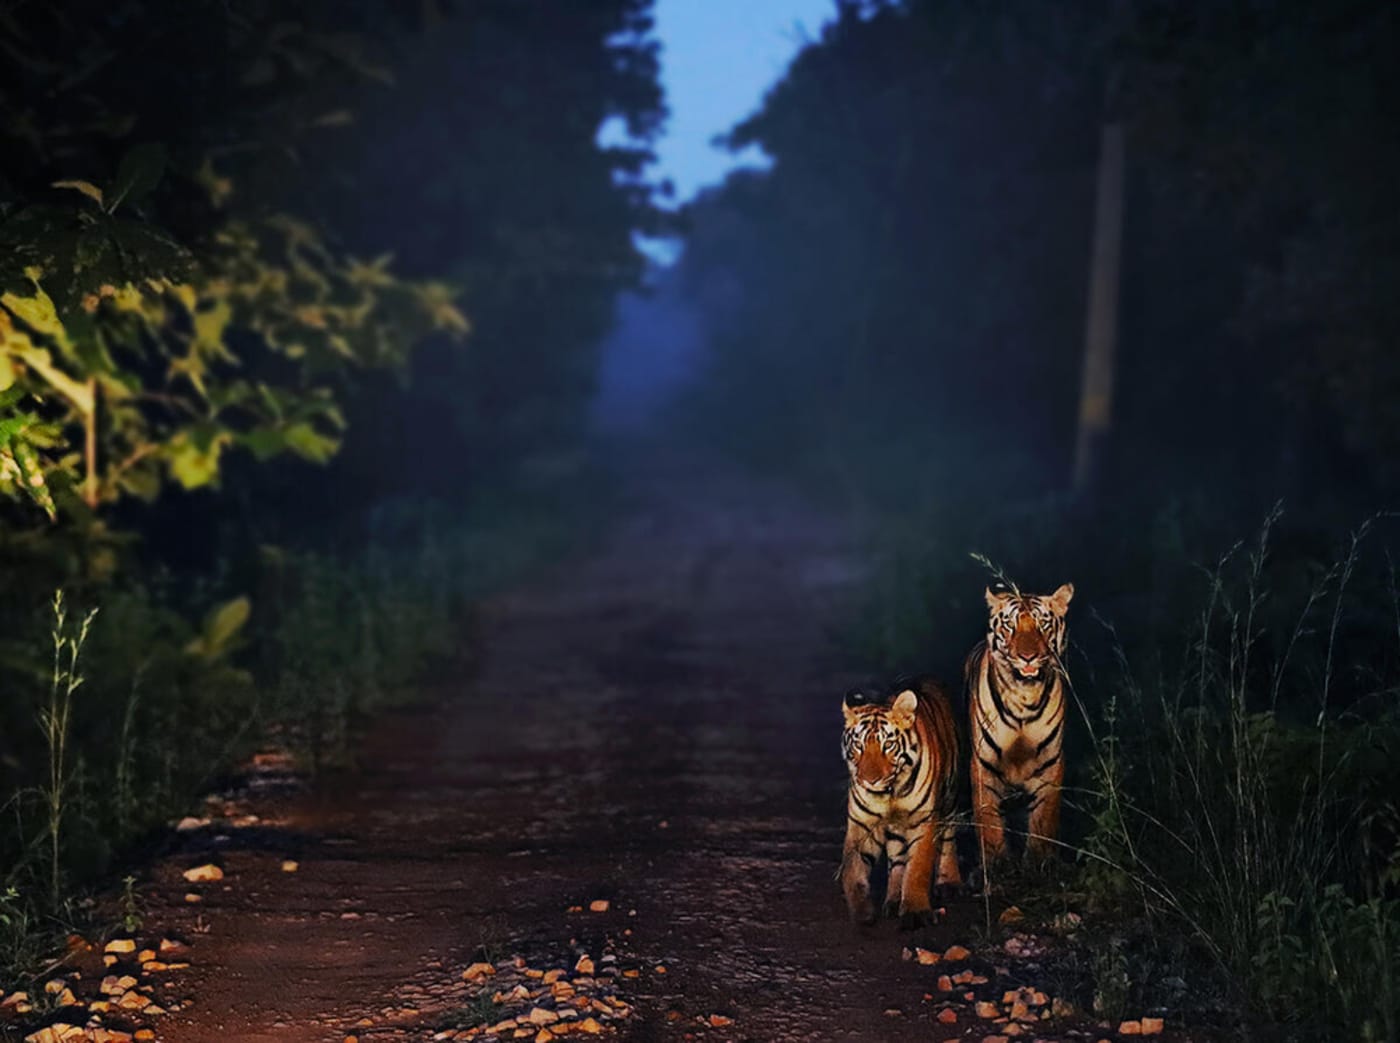 Two tigers walk towards the camera along a road at night.